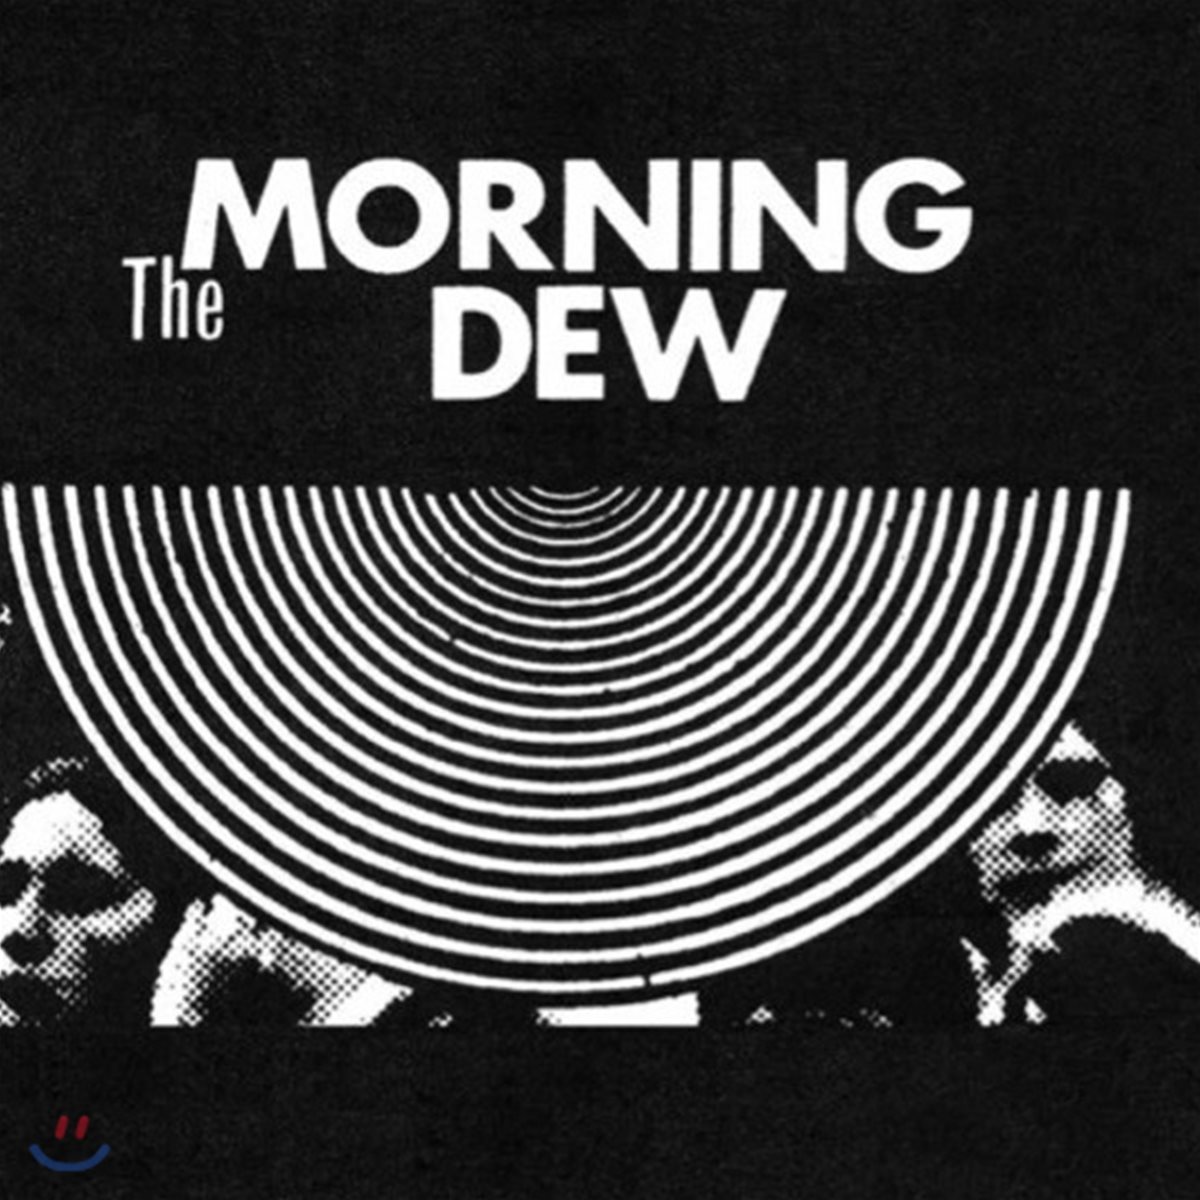 Morning Dew (모닝 듀) - The Morning Dew [2LP]